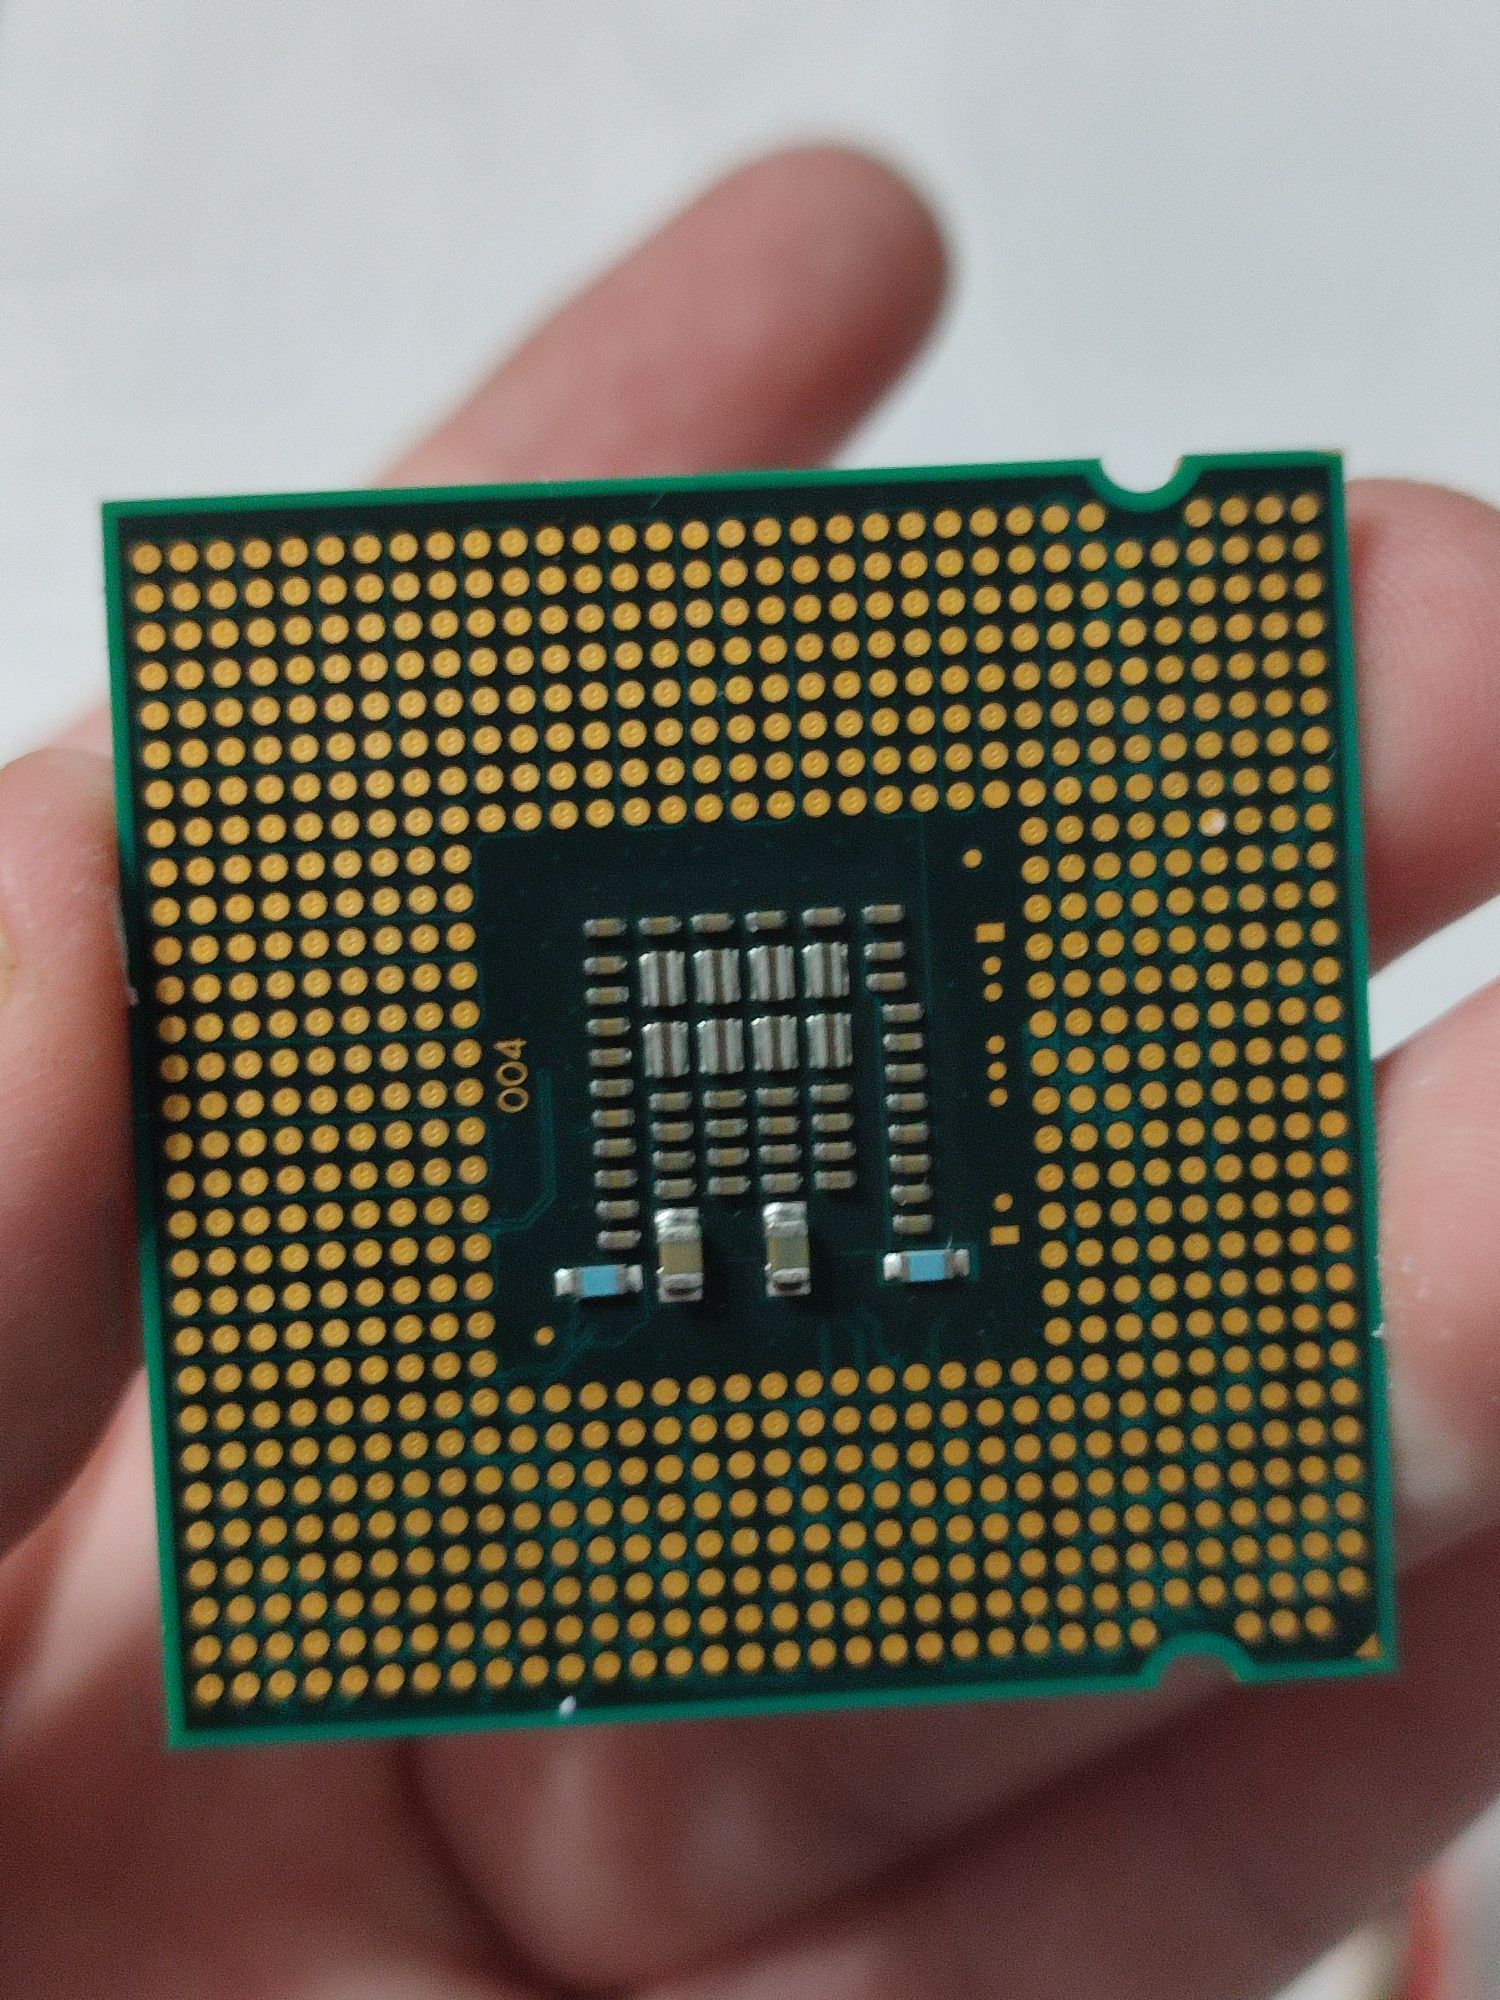 Процессор Intel pentium e5300